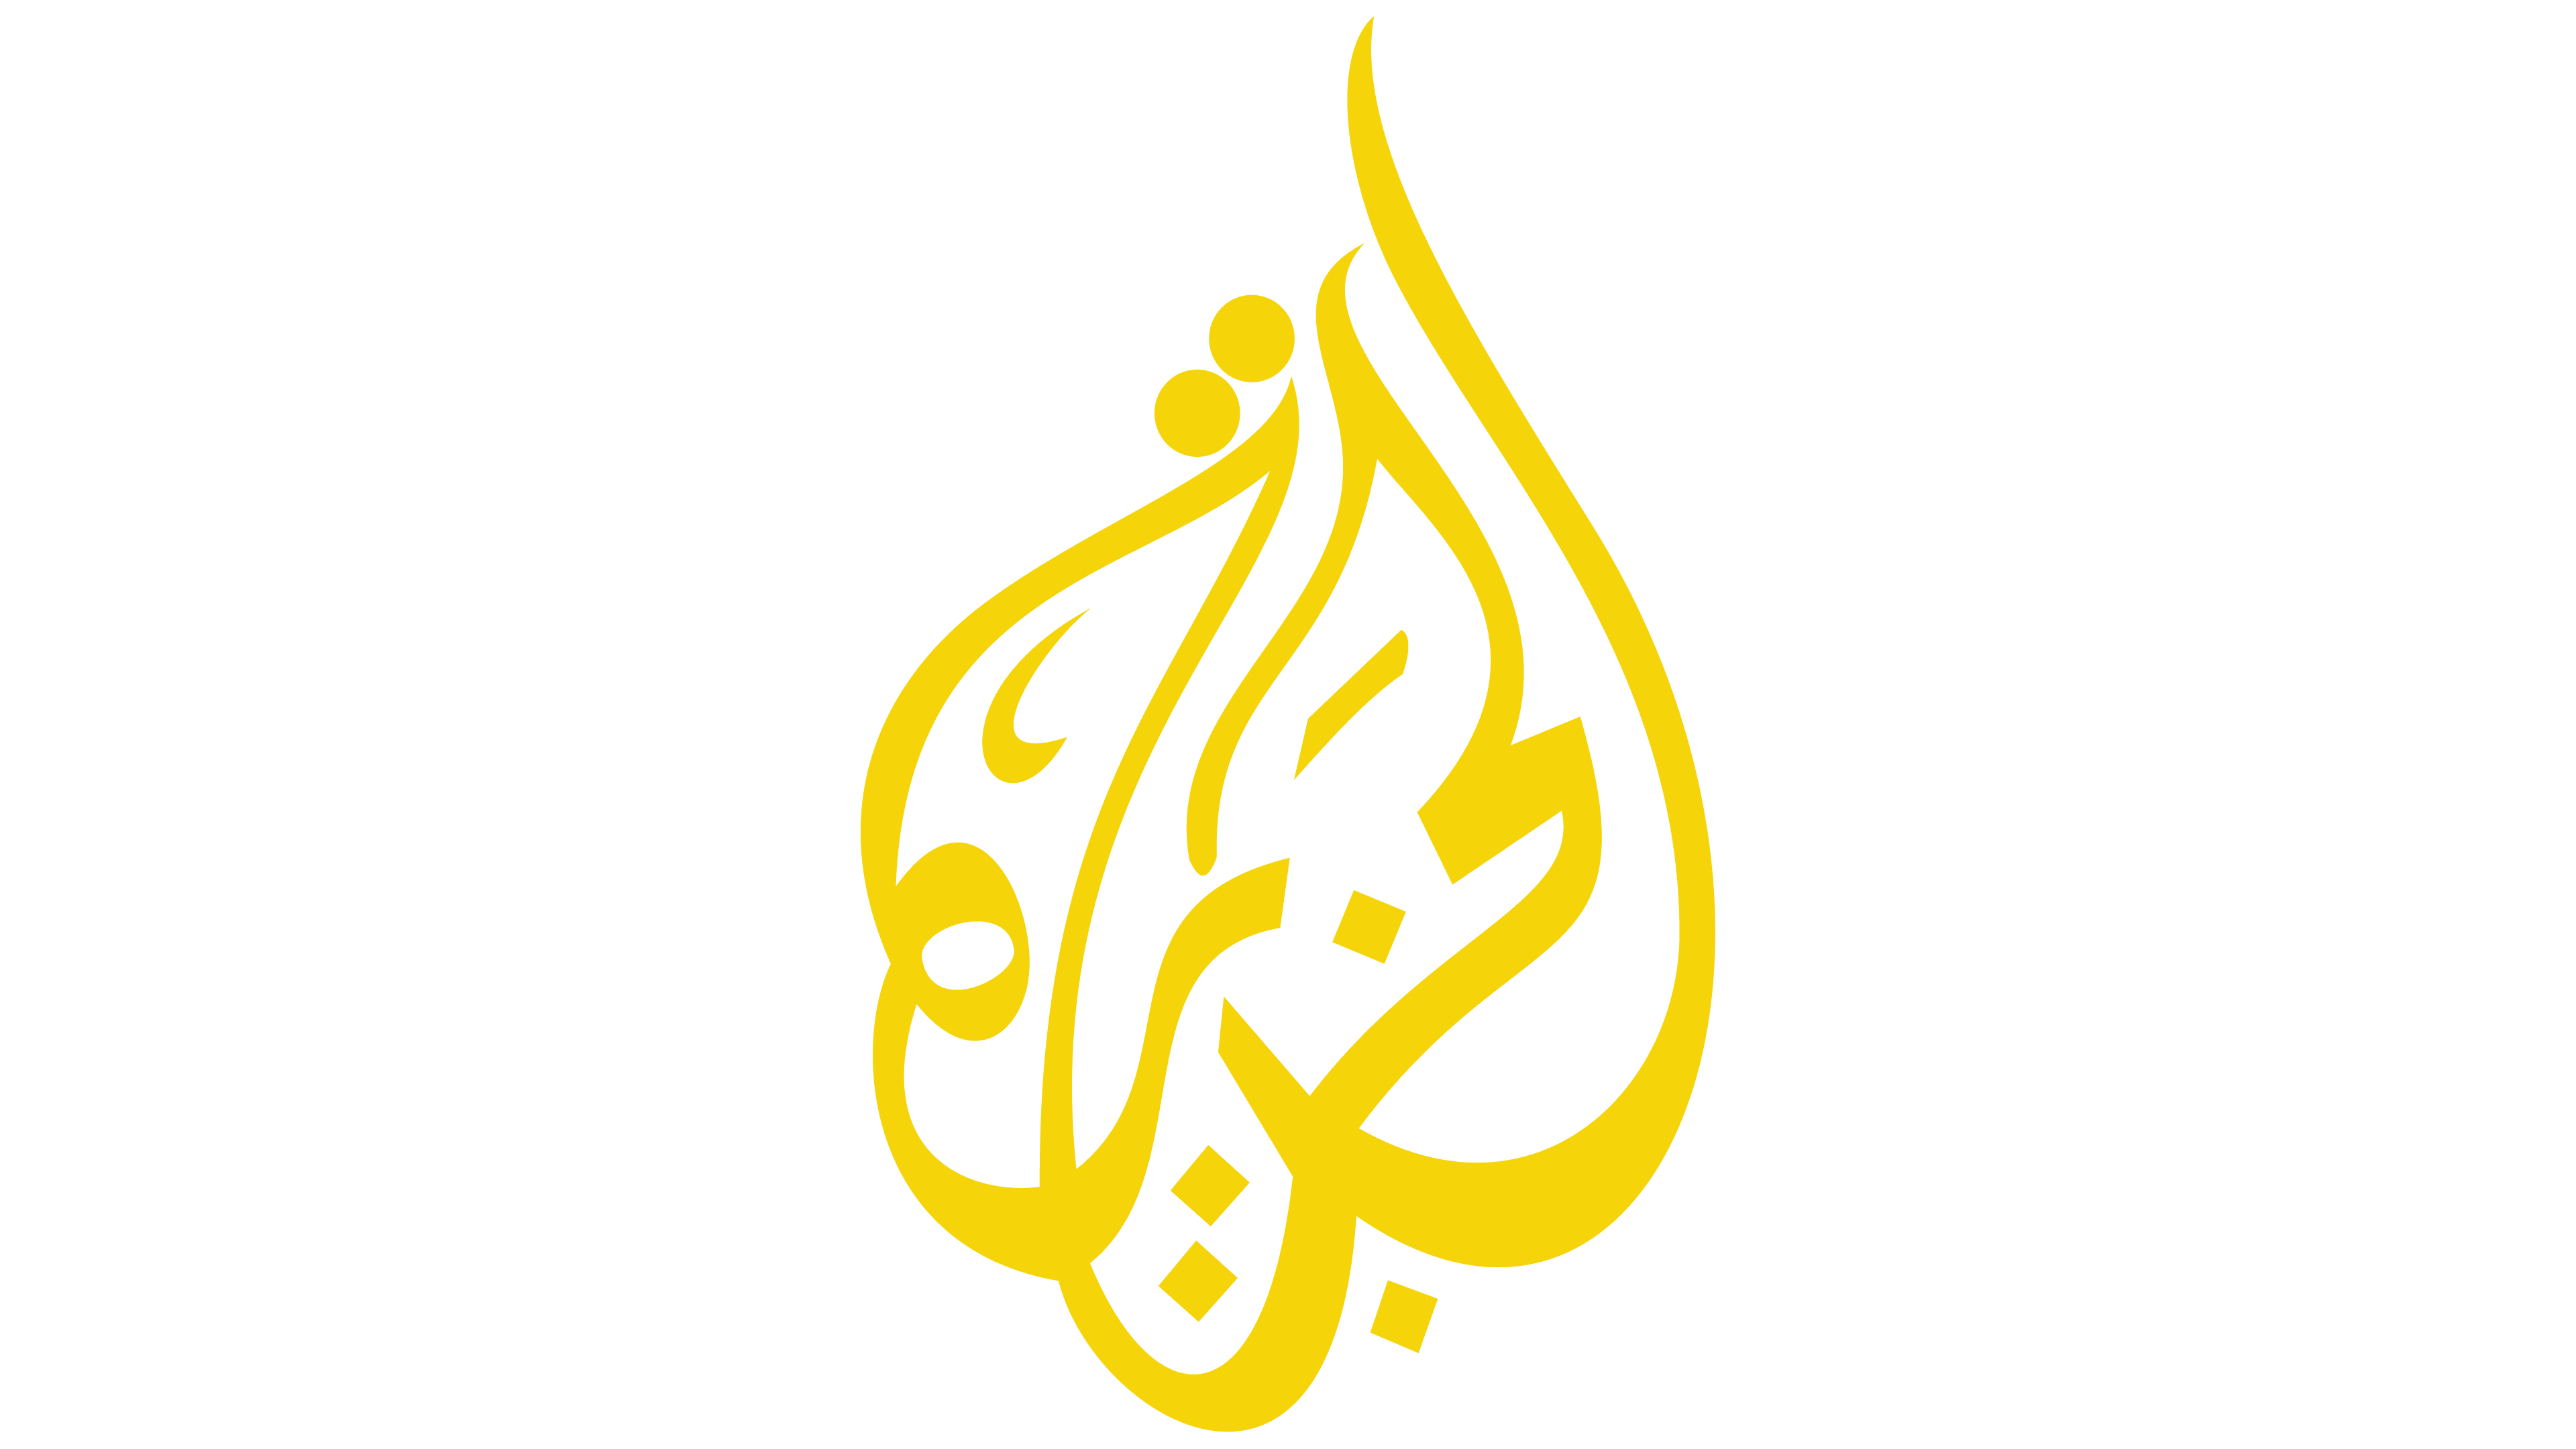 small network logo al jazeera